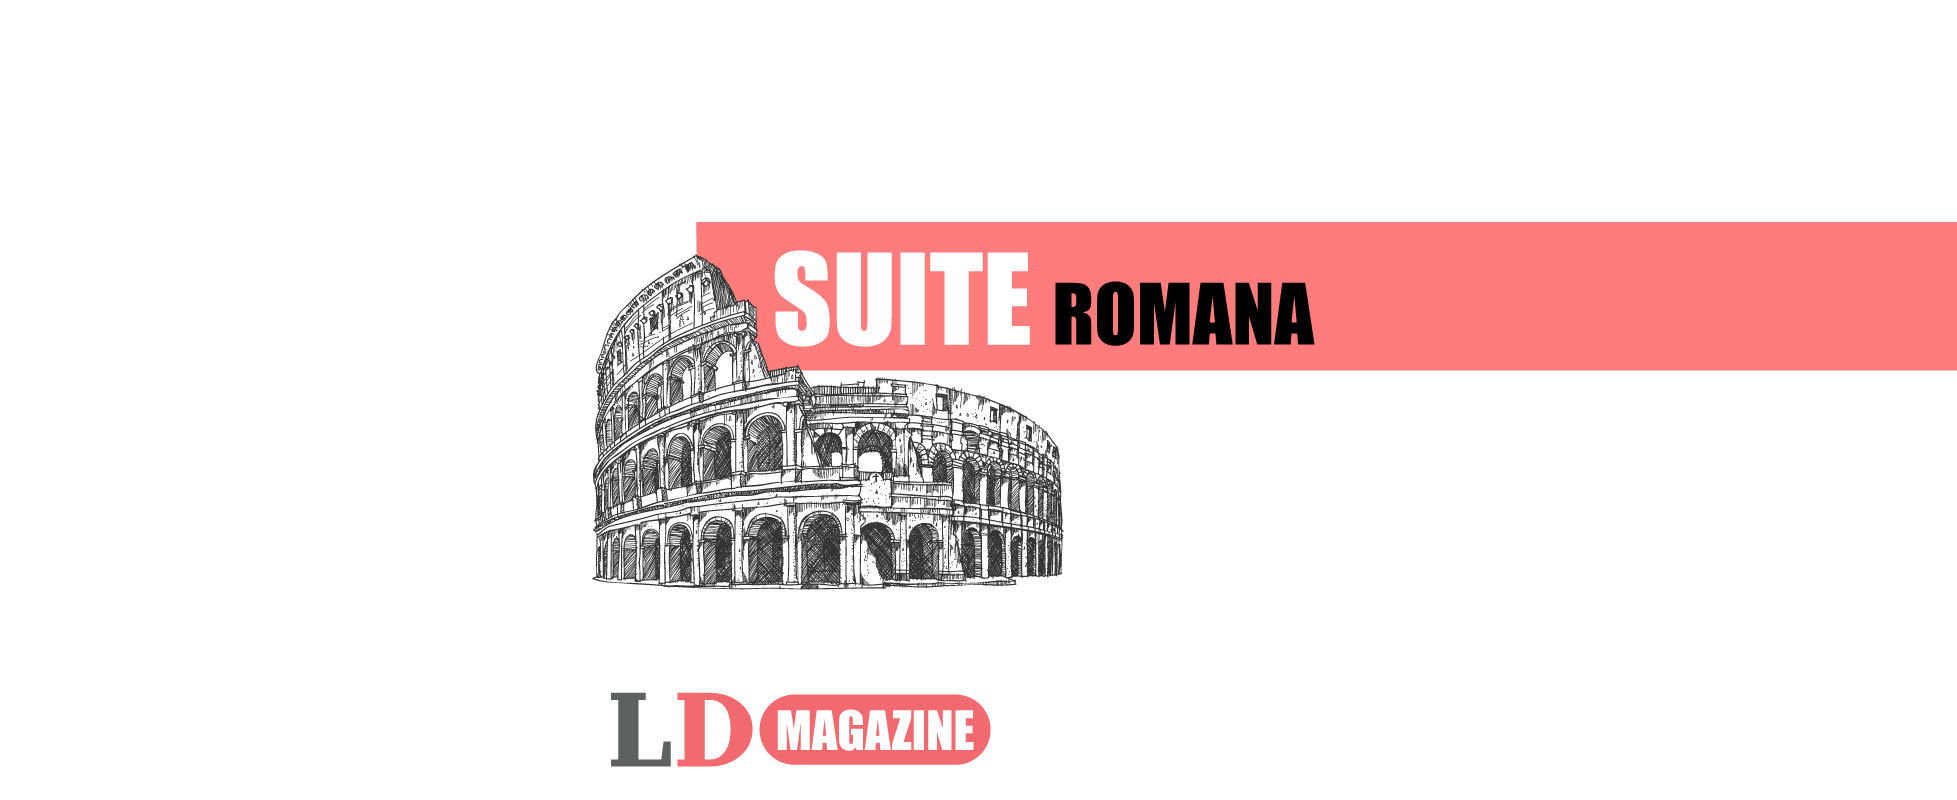 SUITE ROMANA LiguriaDay quotidiano